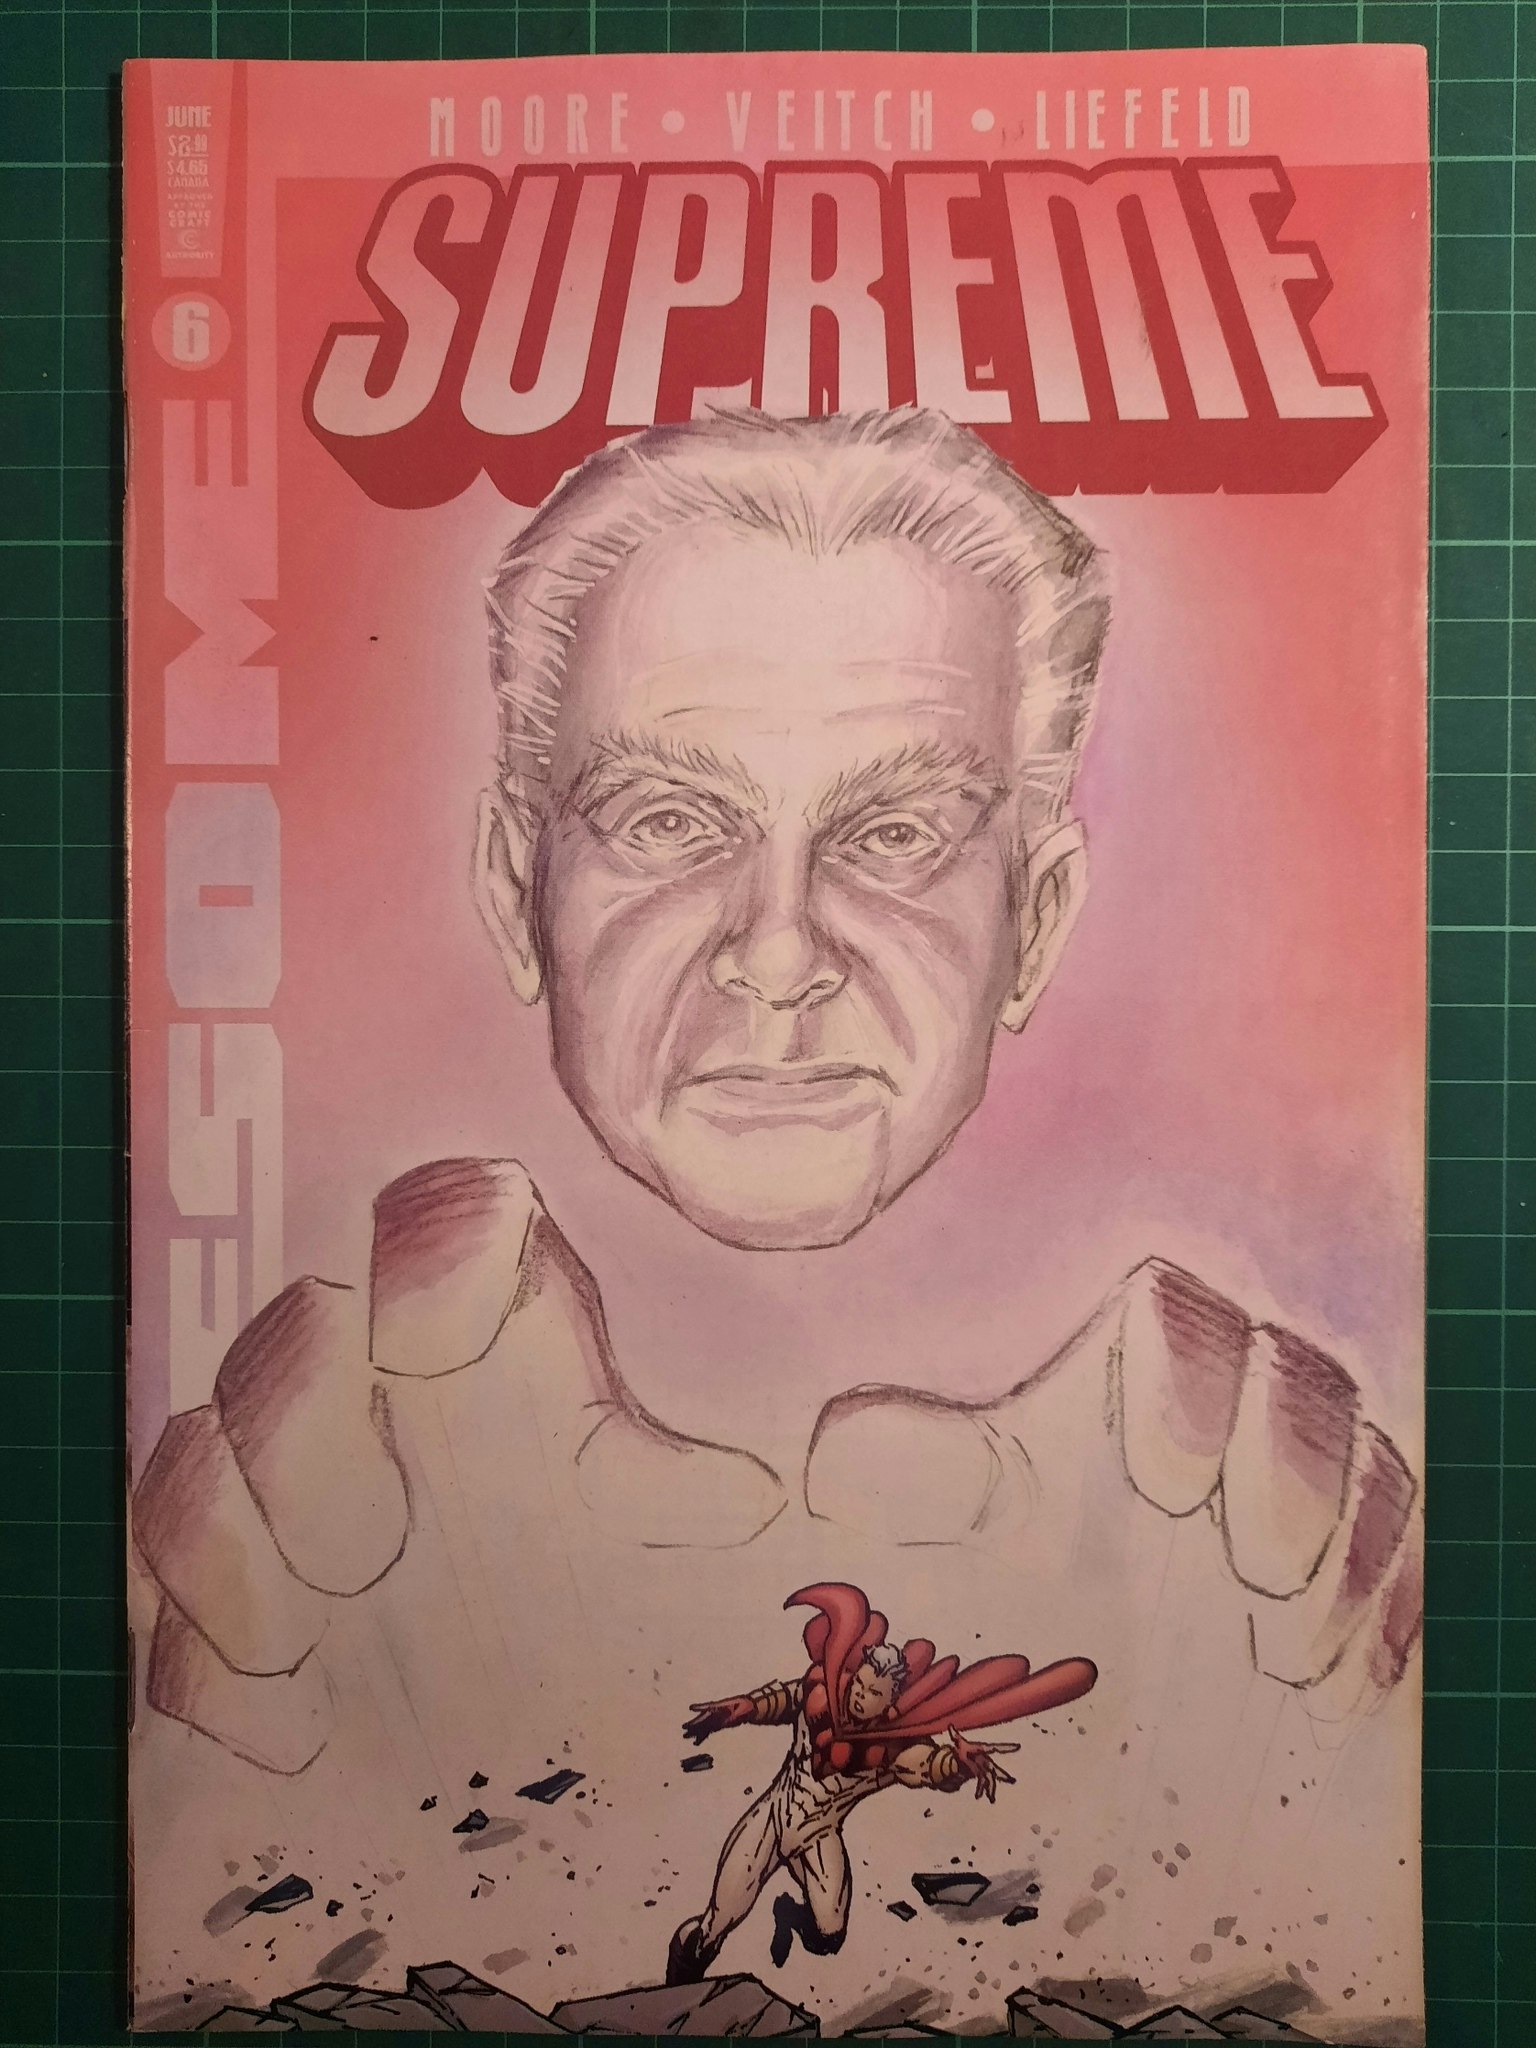 Supreme #06